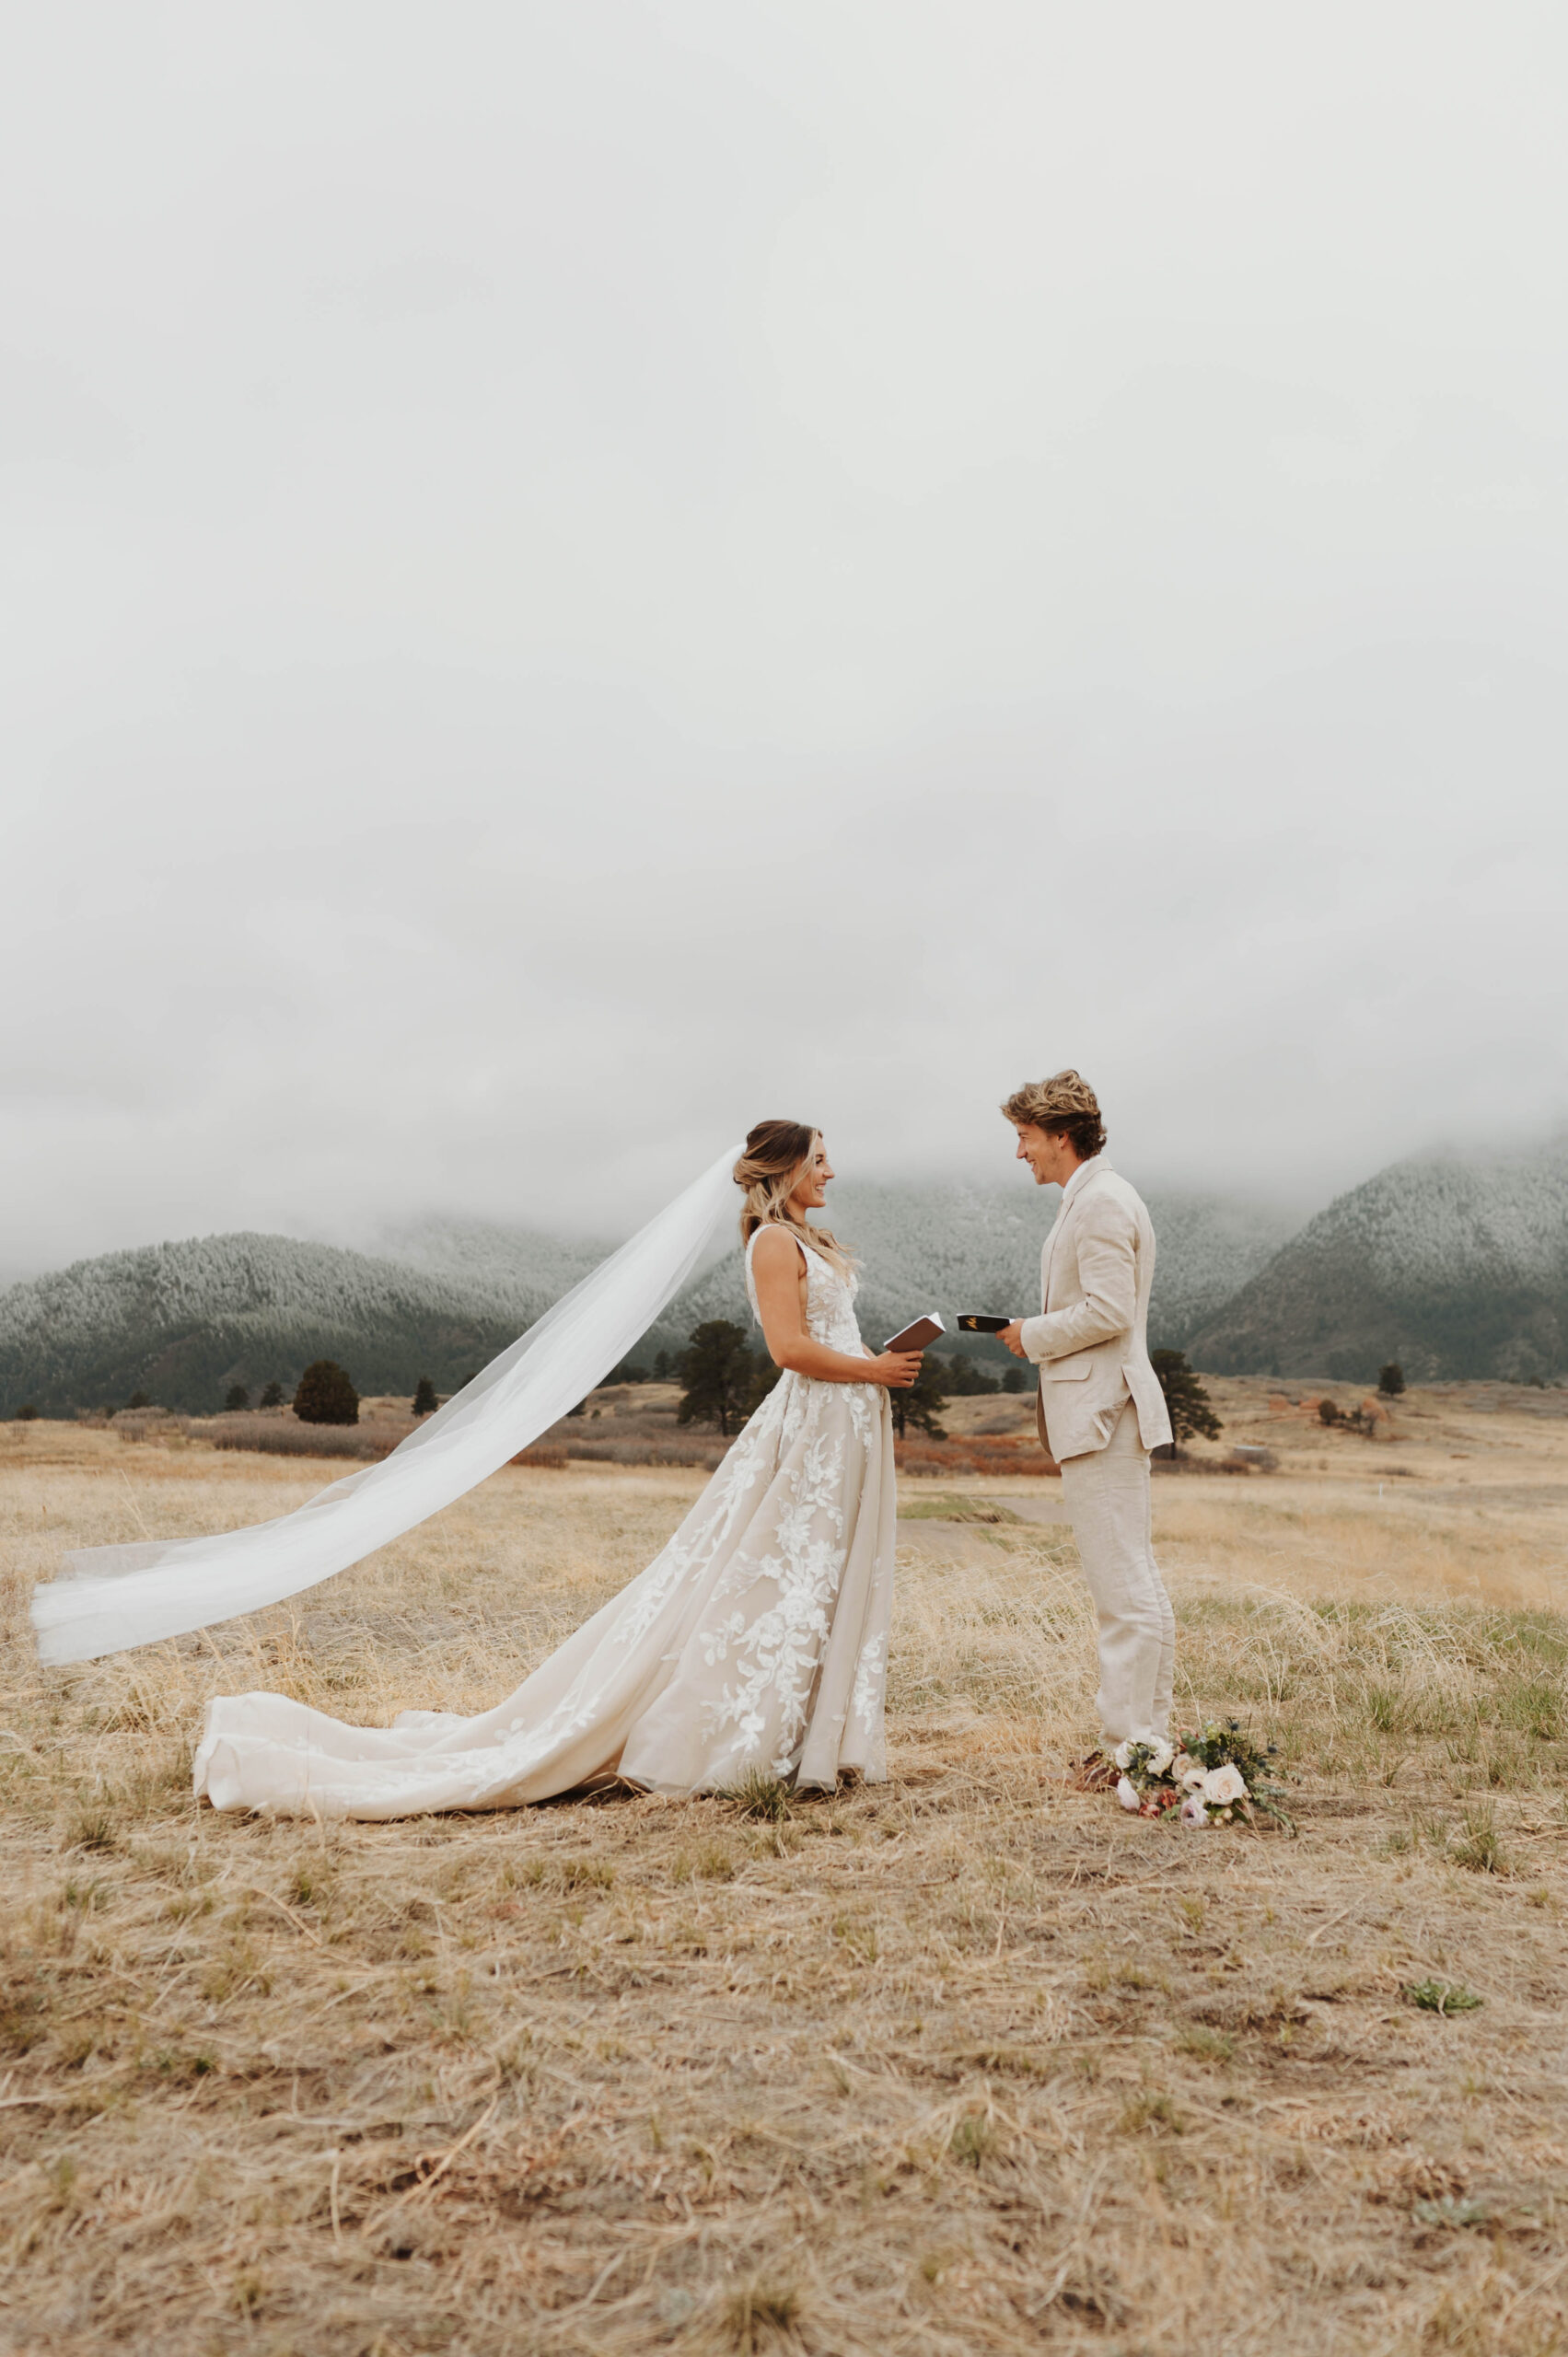 A bride and groom self solemnize in Colorado